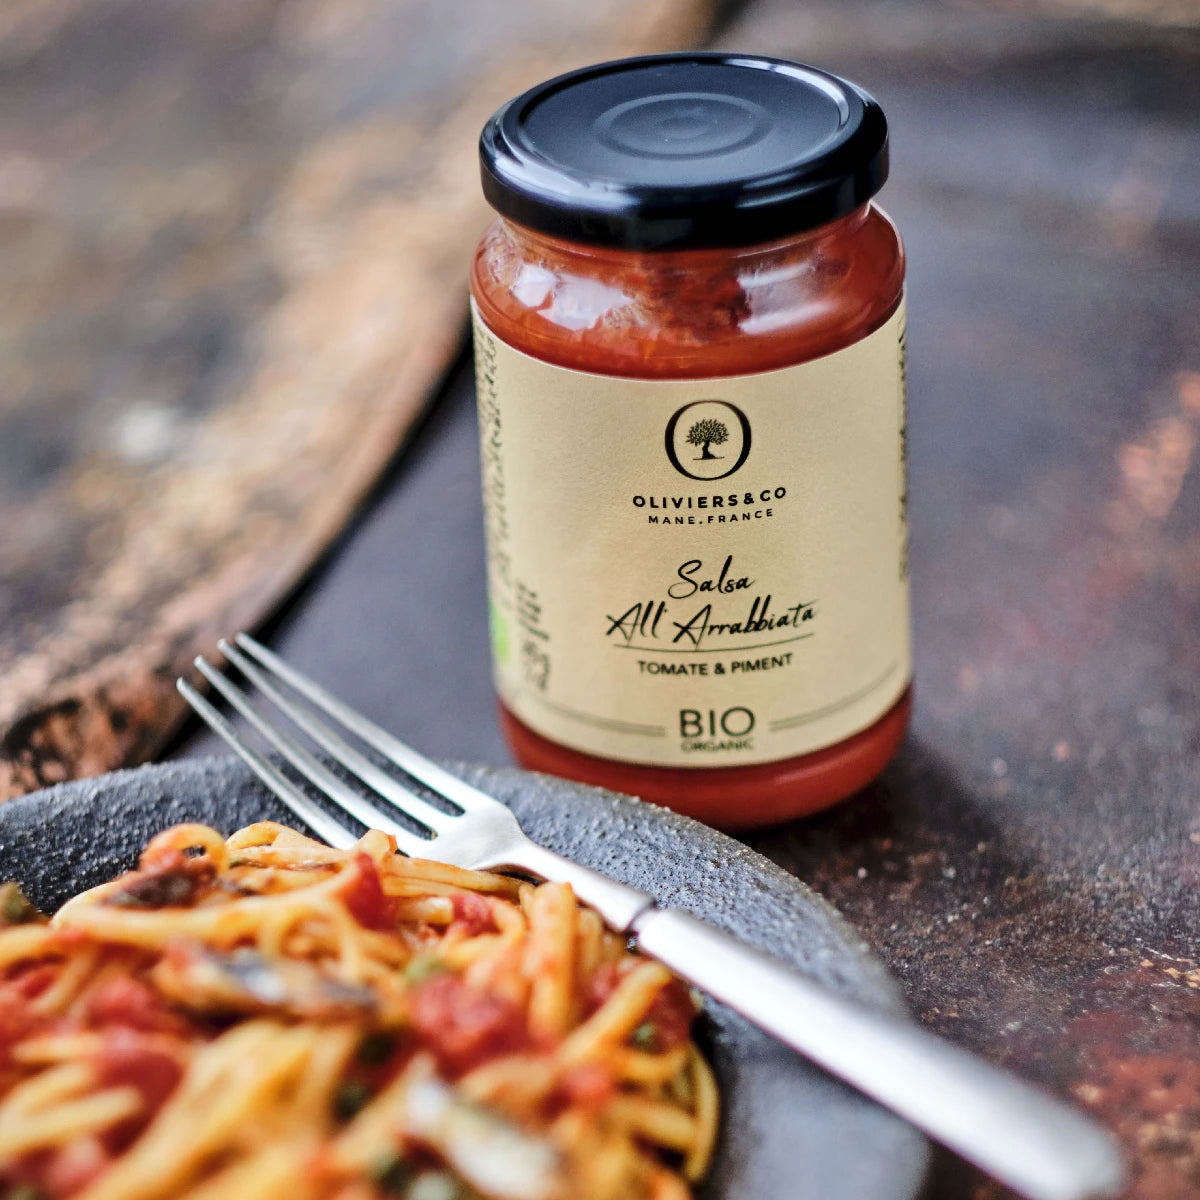 Økologisk chili-tomat pastasauce fra Oliviers & Co